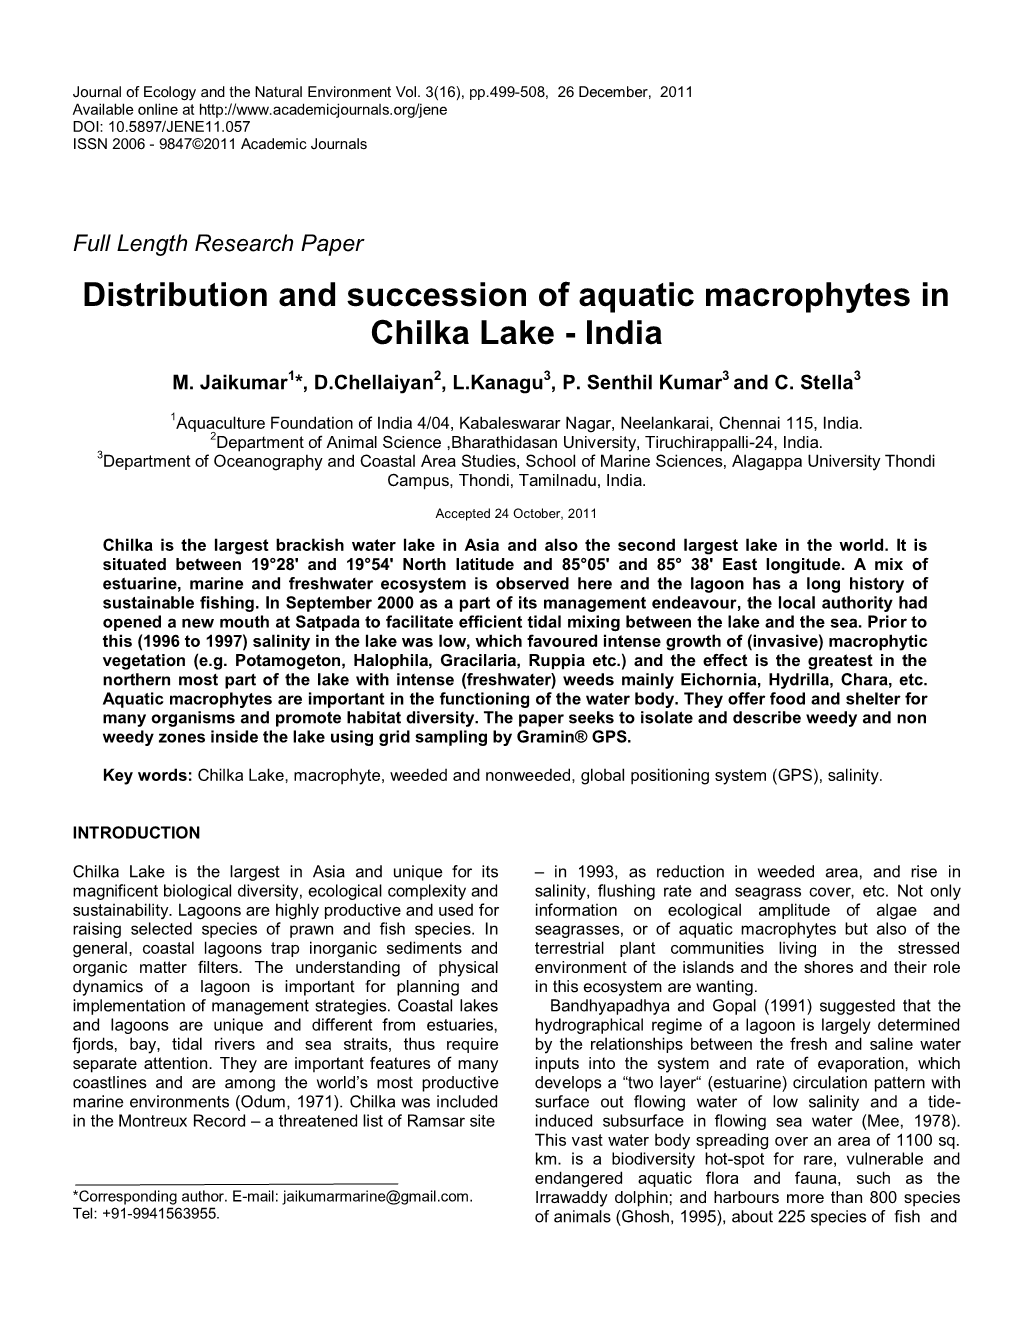 Grid Sampling and Distribution Pattern of Aquatic Macrophytes in Chilka